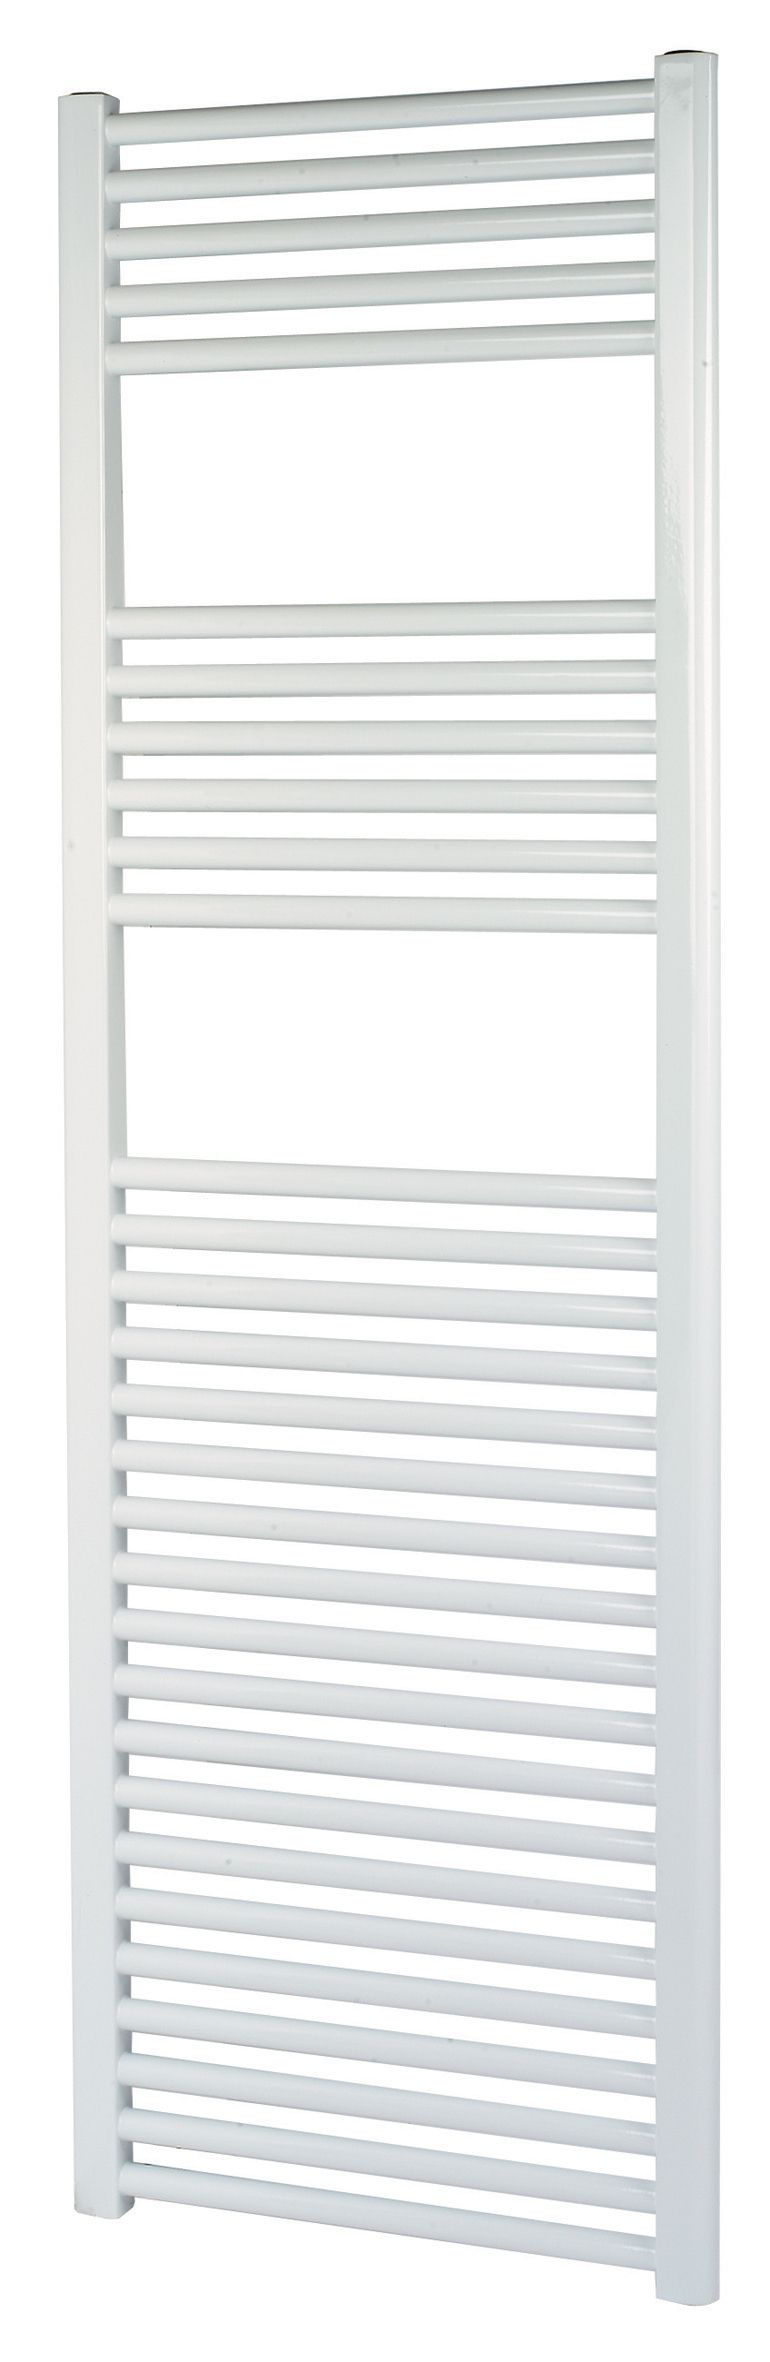 Kudox 819W Electric White Towel warmer (H)1500mm (W)600mm